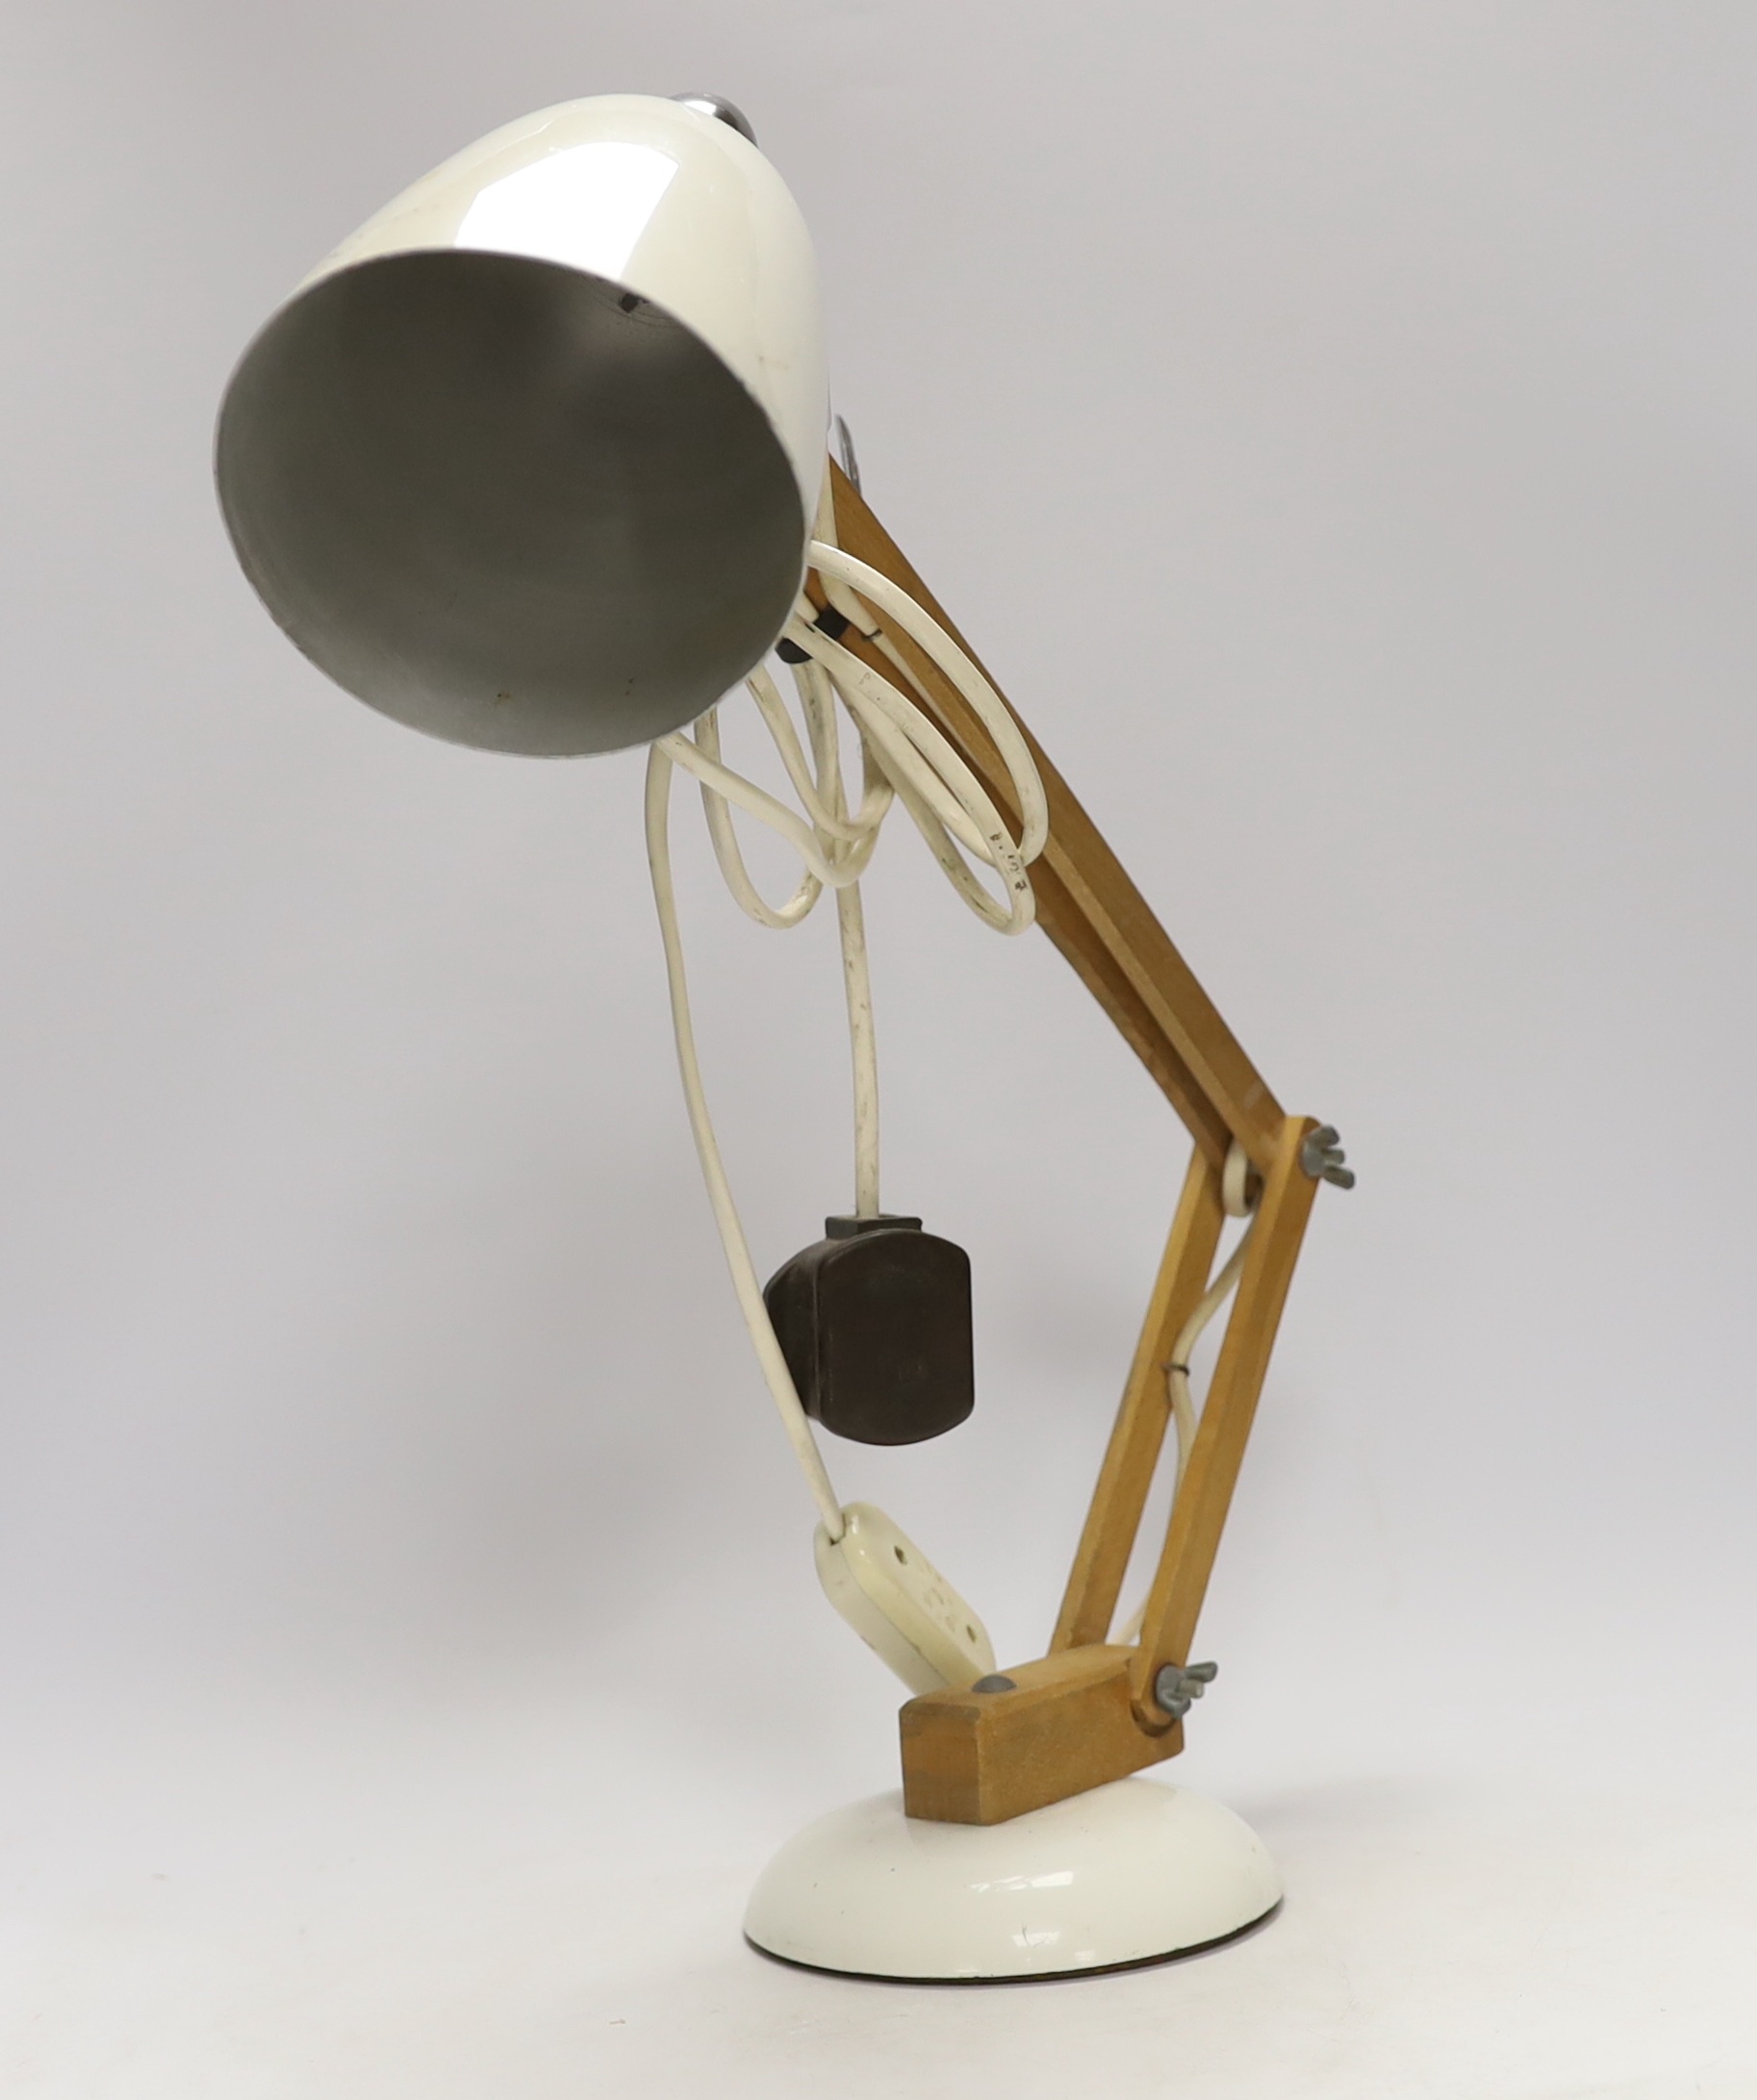 A Terence Conran Maclamp desk lamp, 43cm high